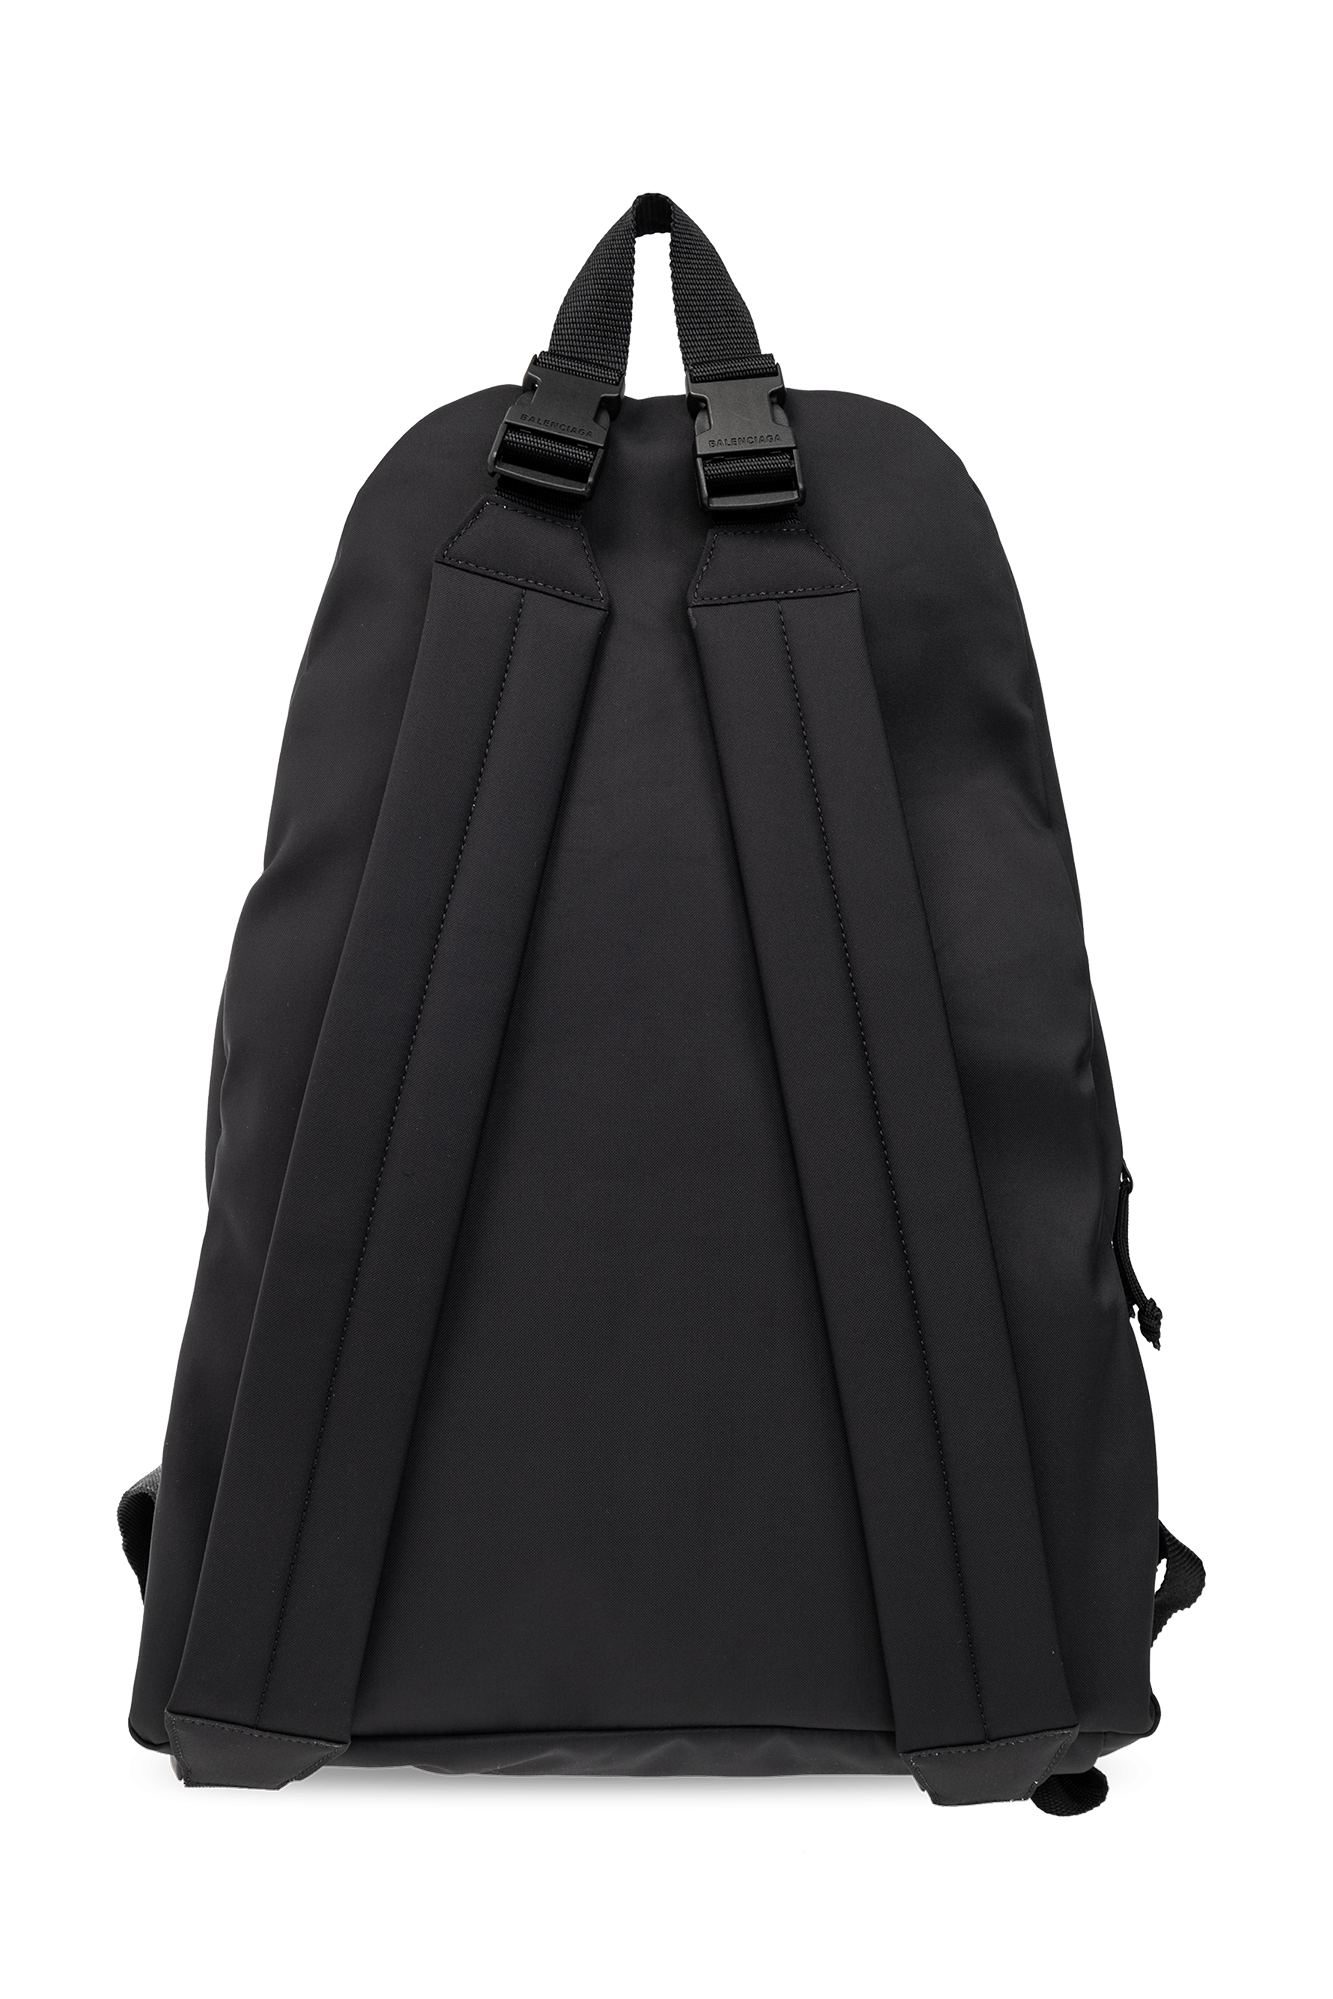 Balenciaga Backpack with logo